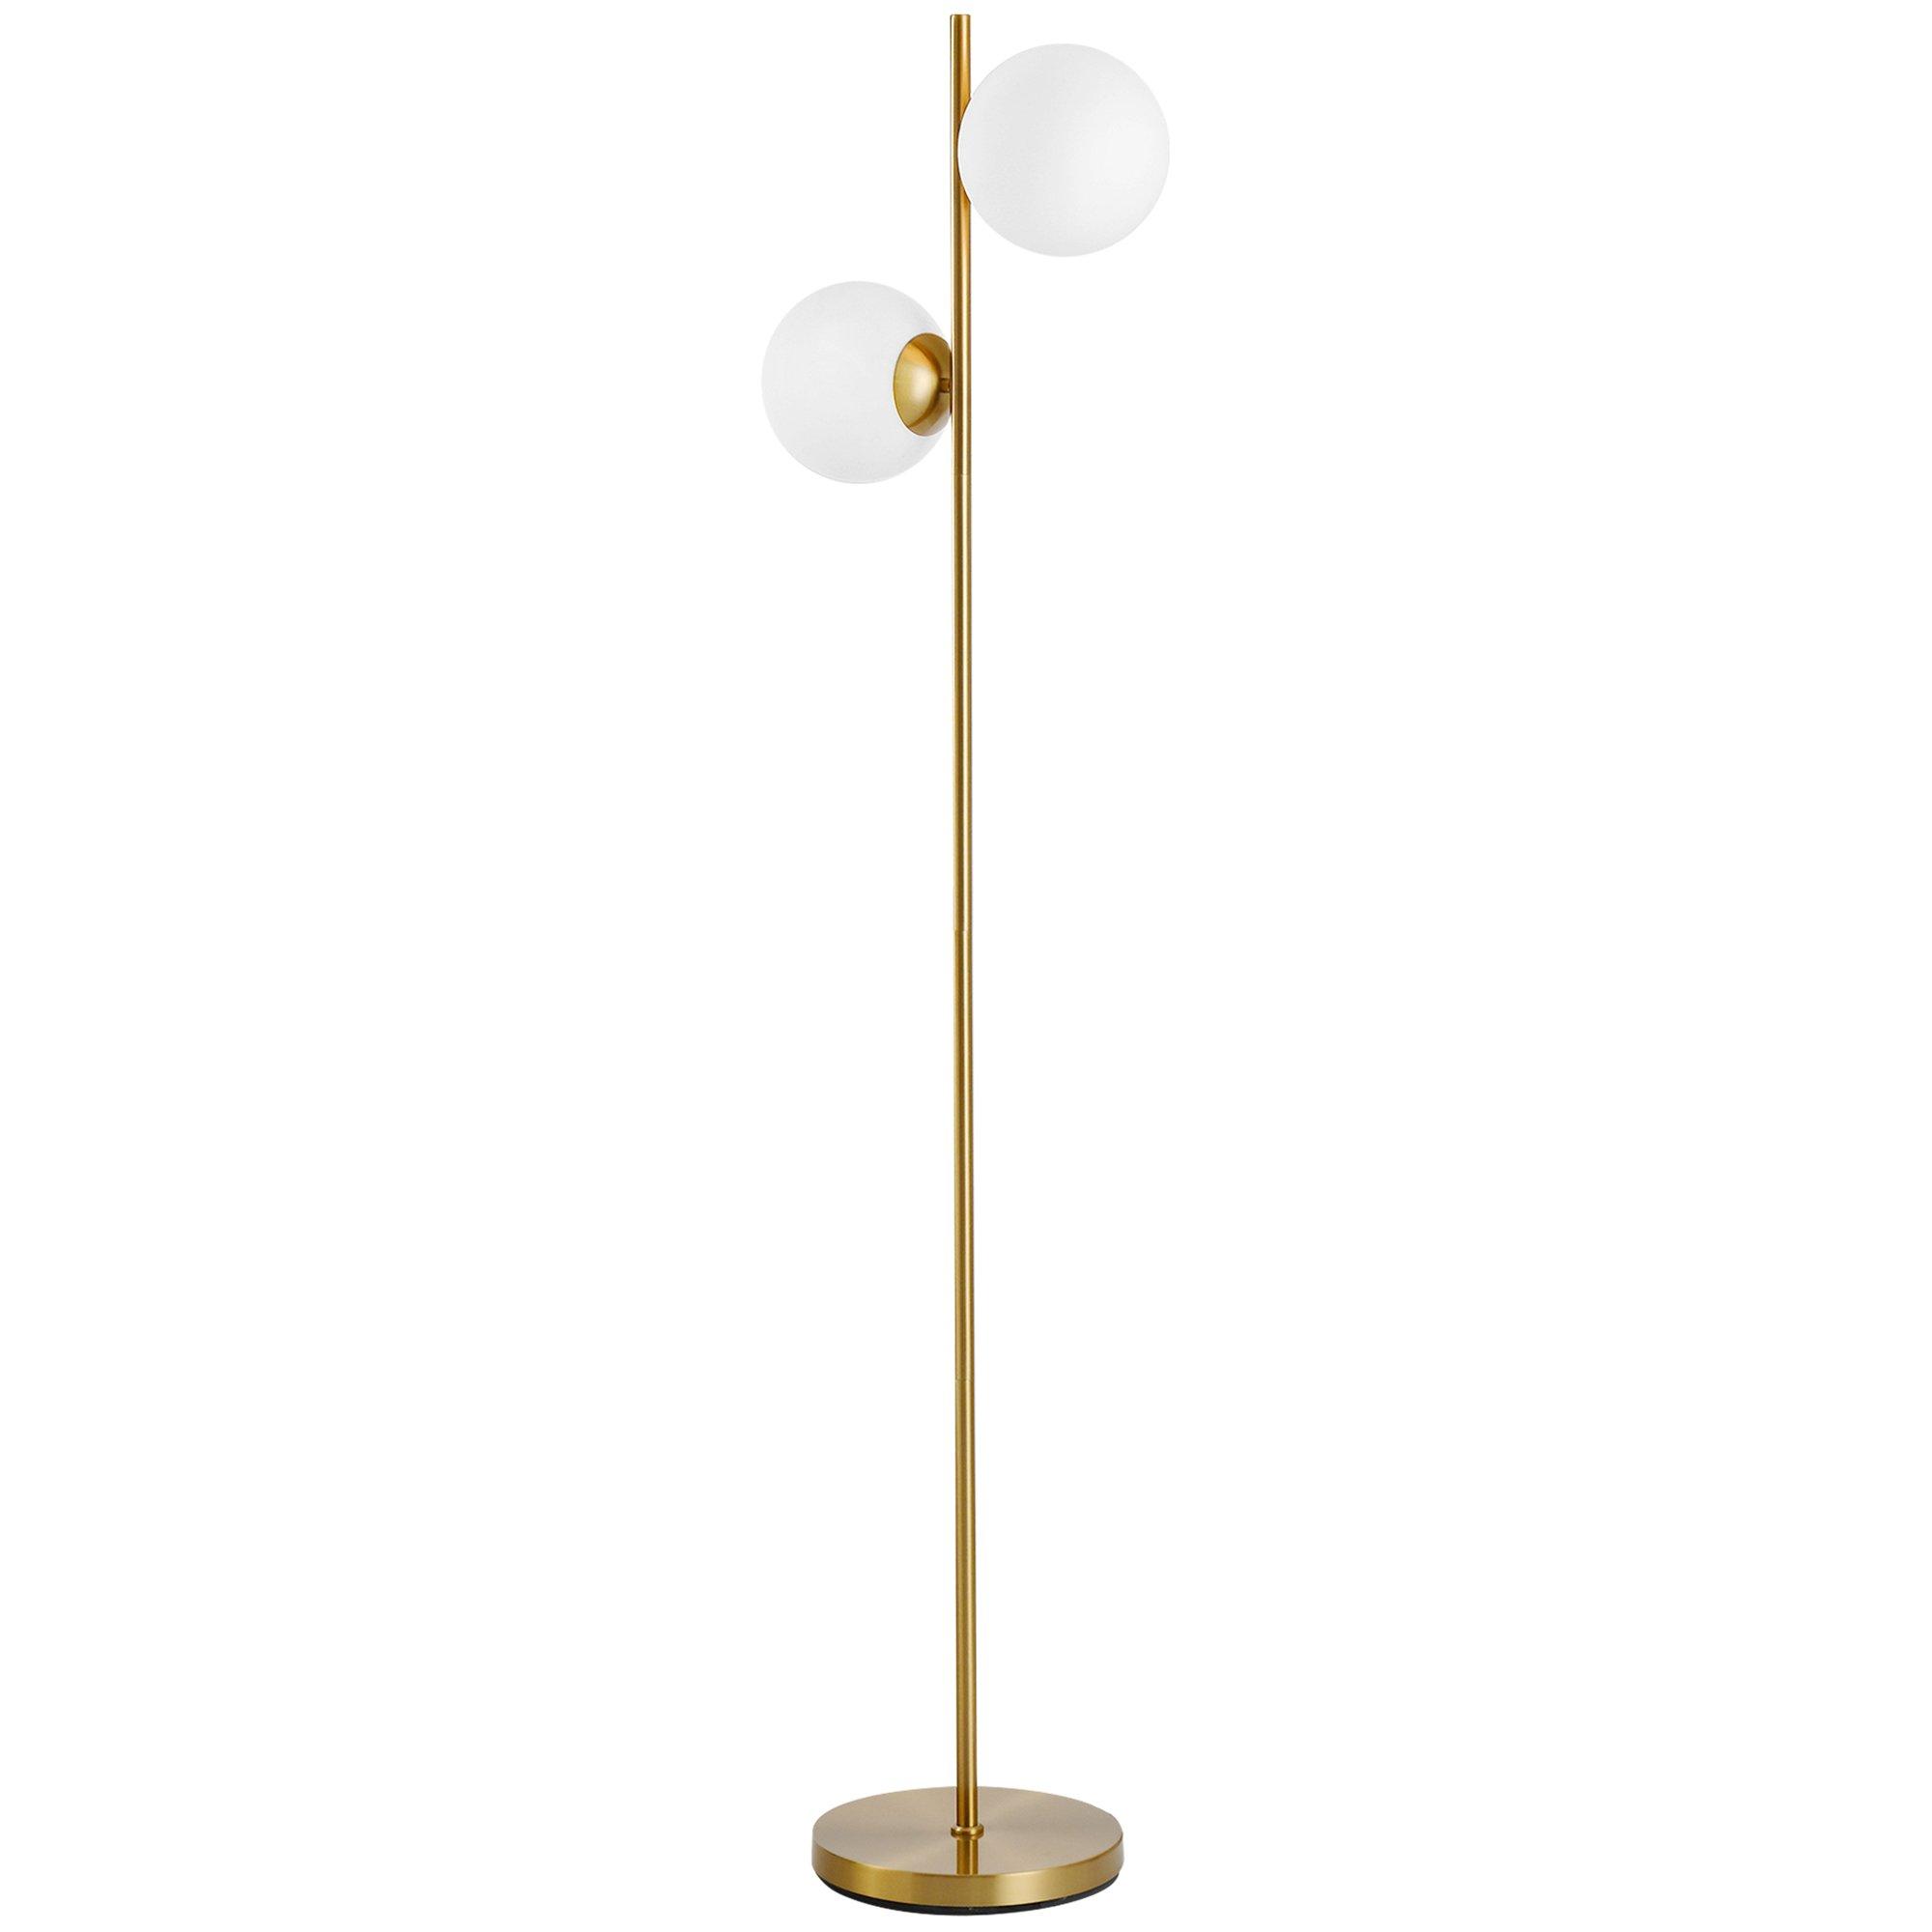 2 Glass Shade Floor Lamp Metal Pole Modern Decorative with Floor